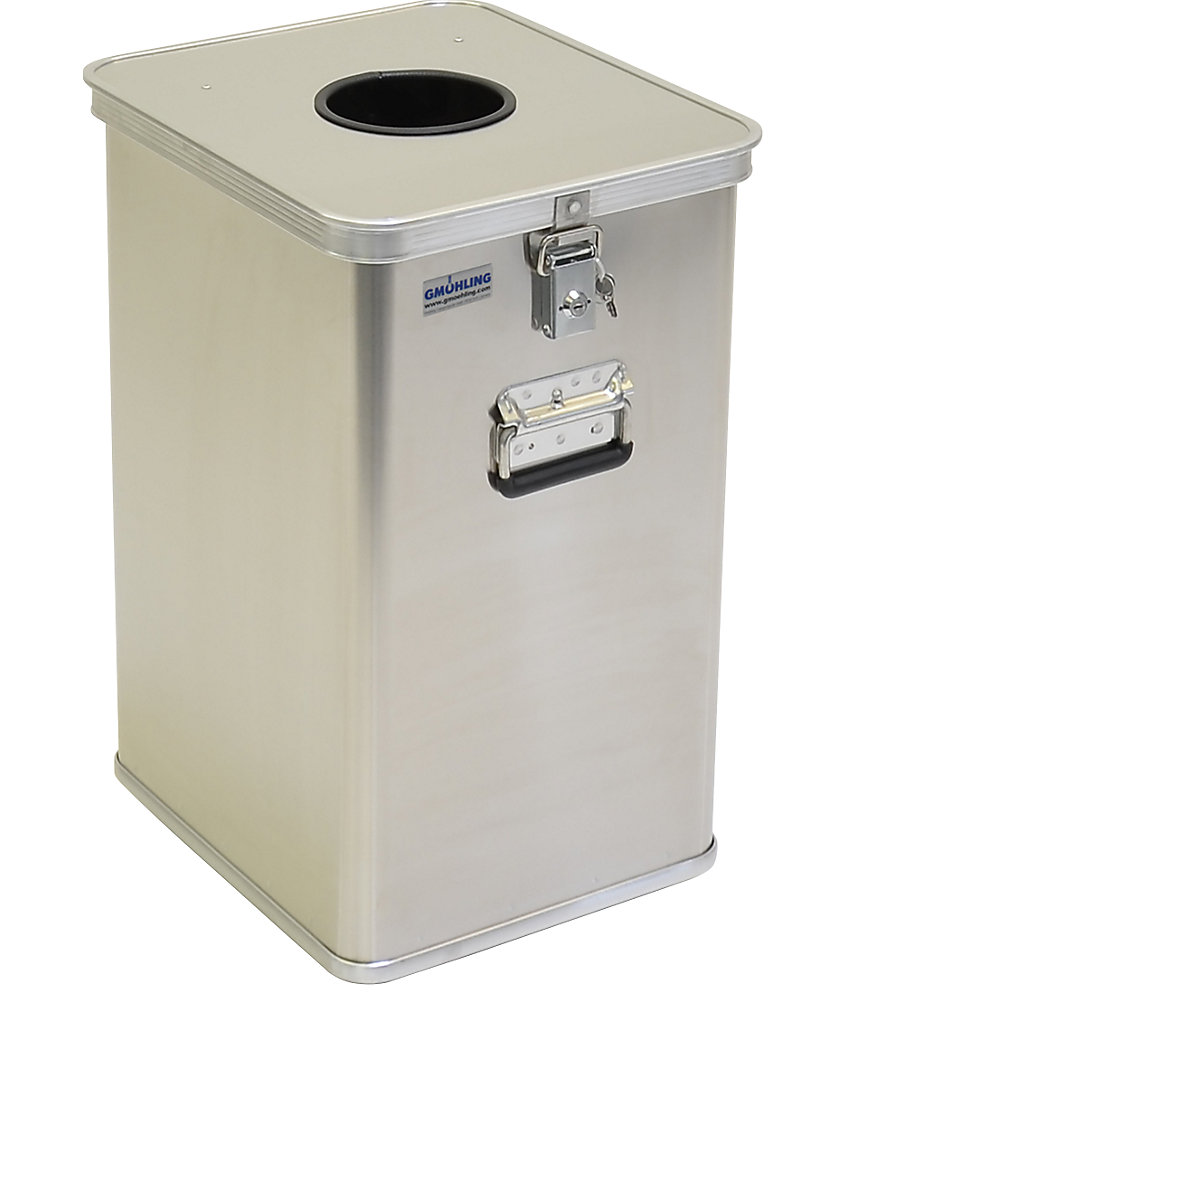 G®-DROP waste bin/safety disposal can - Gmöhling